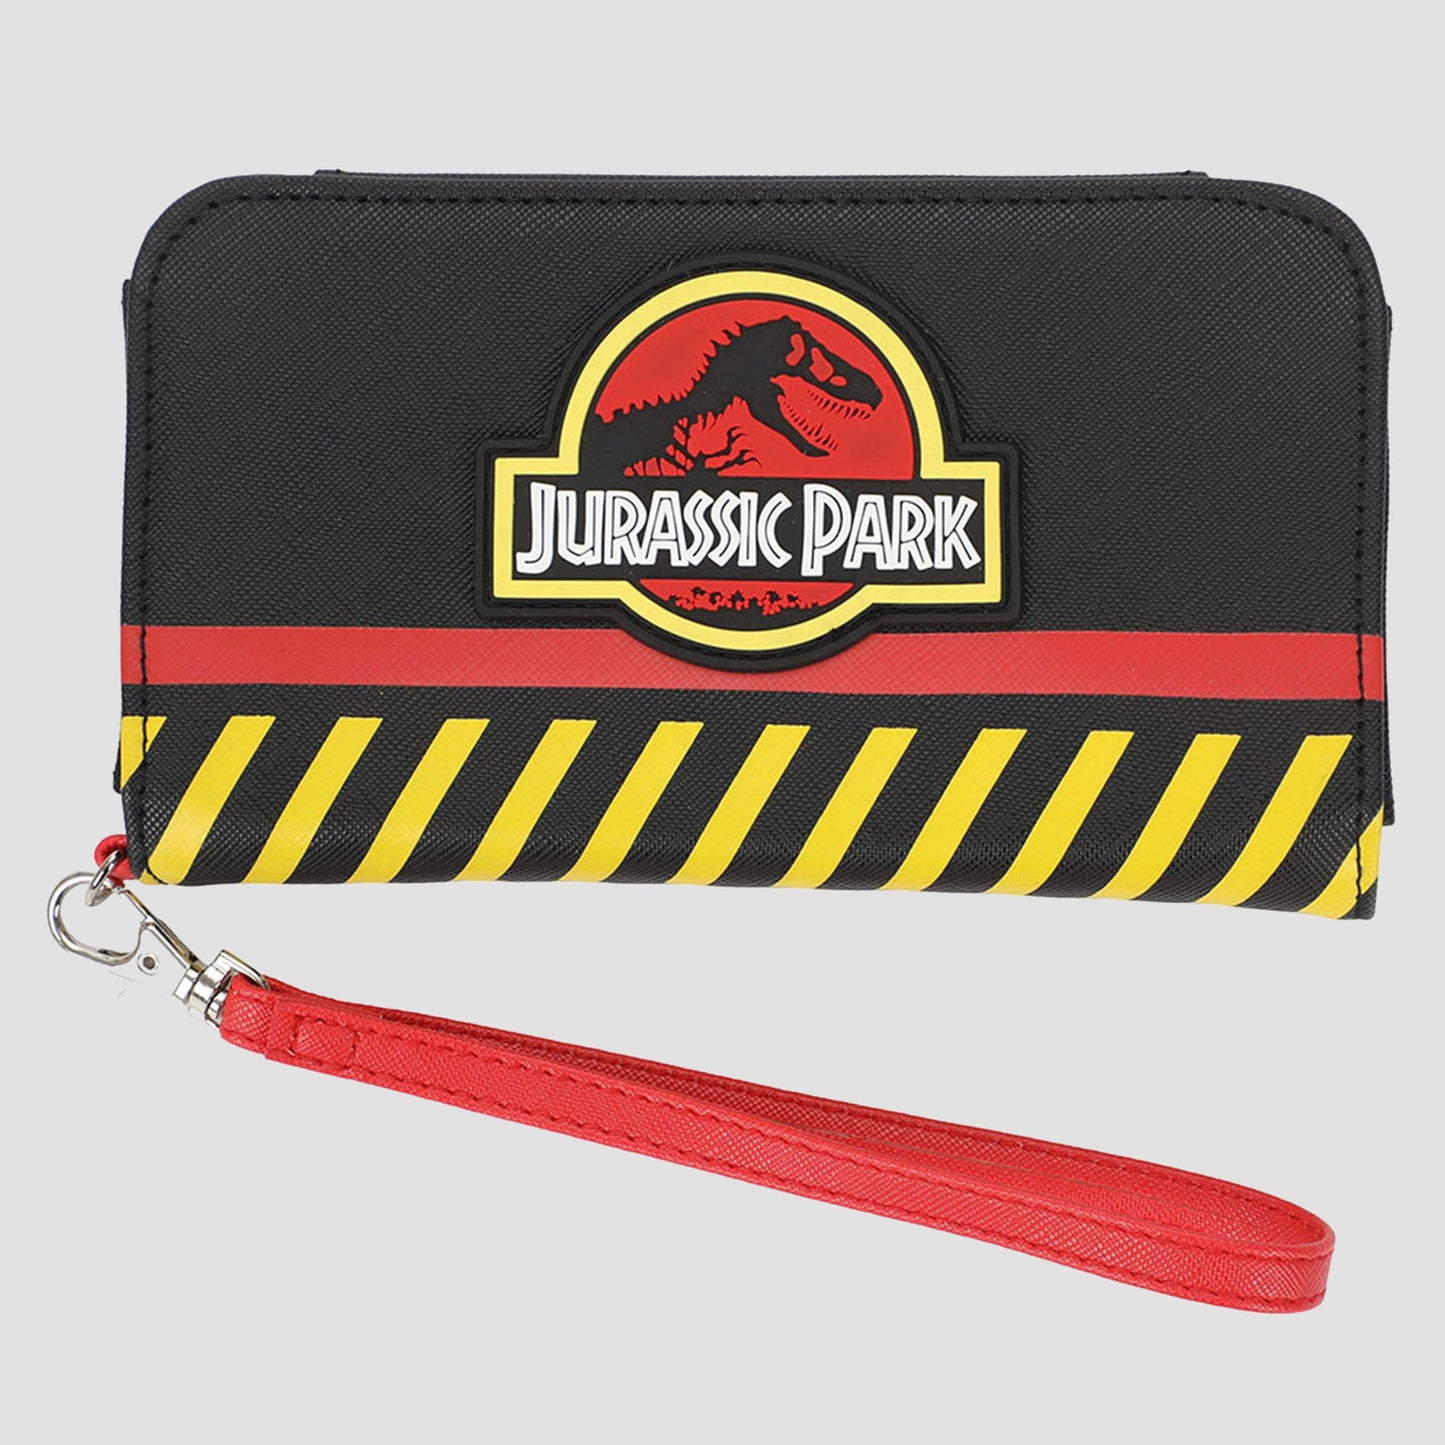 Isla Nublar (Jurassic Park) Phone Wallet Wristlet